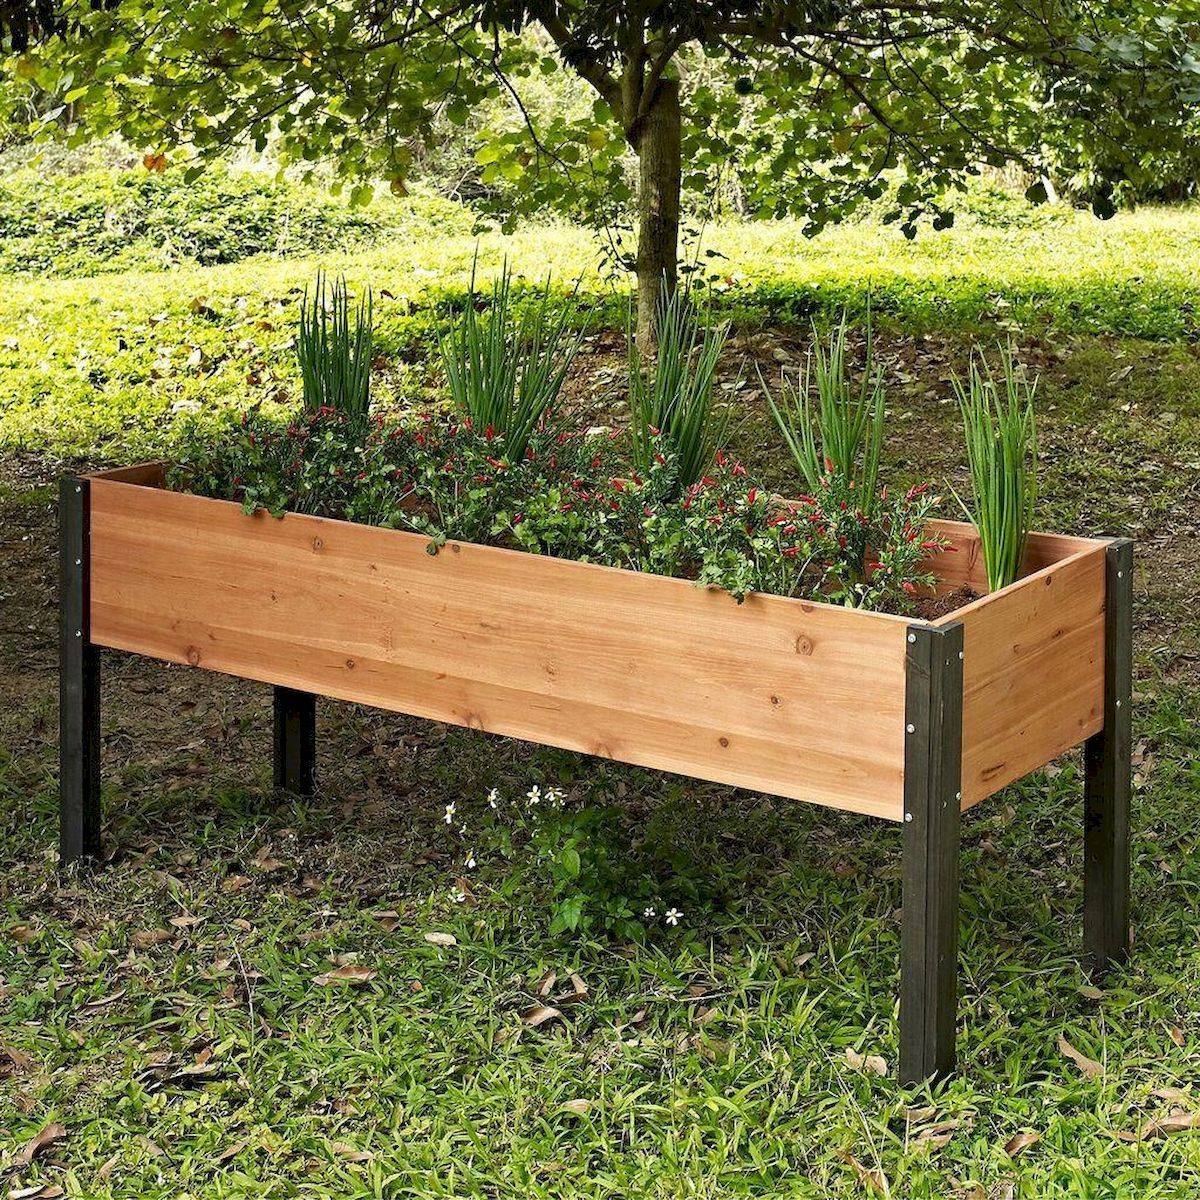 Recycle Wood Diy Raised Garden Planter Boxes Ideas Decoratorist